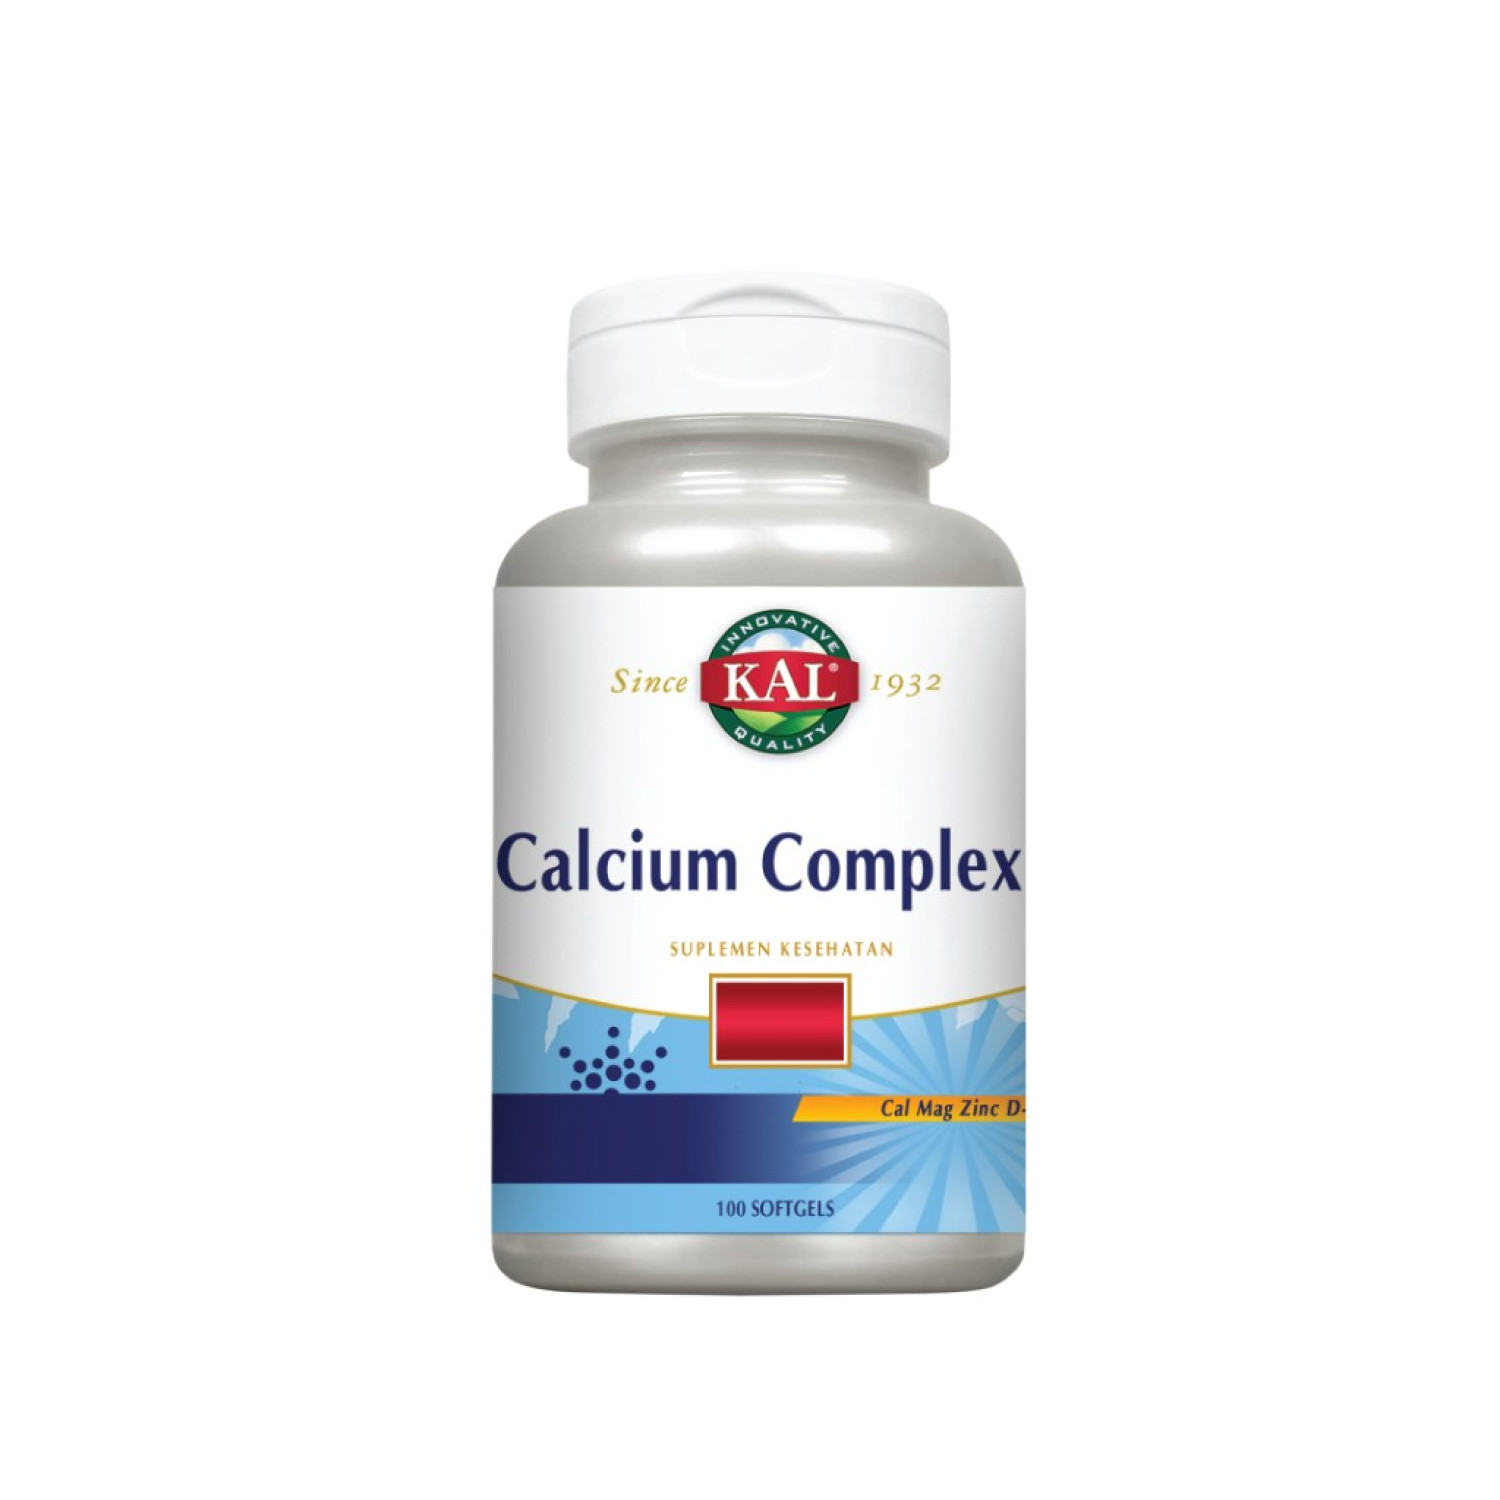 kal-calcium-complex-100-softgel-exp-date-0124-65434653bbd8d.jpeg